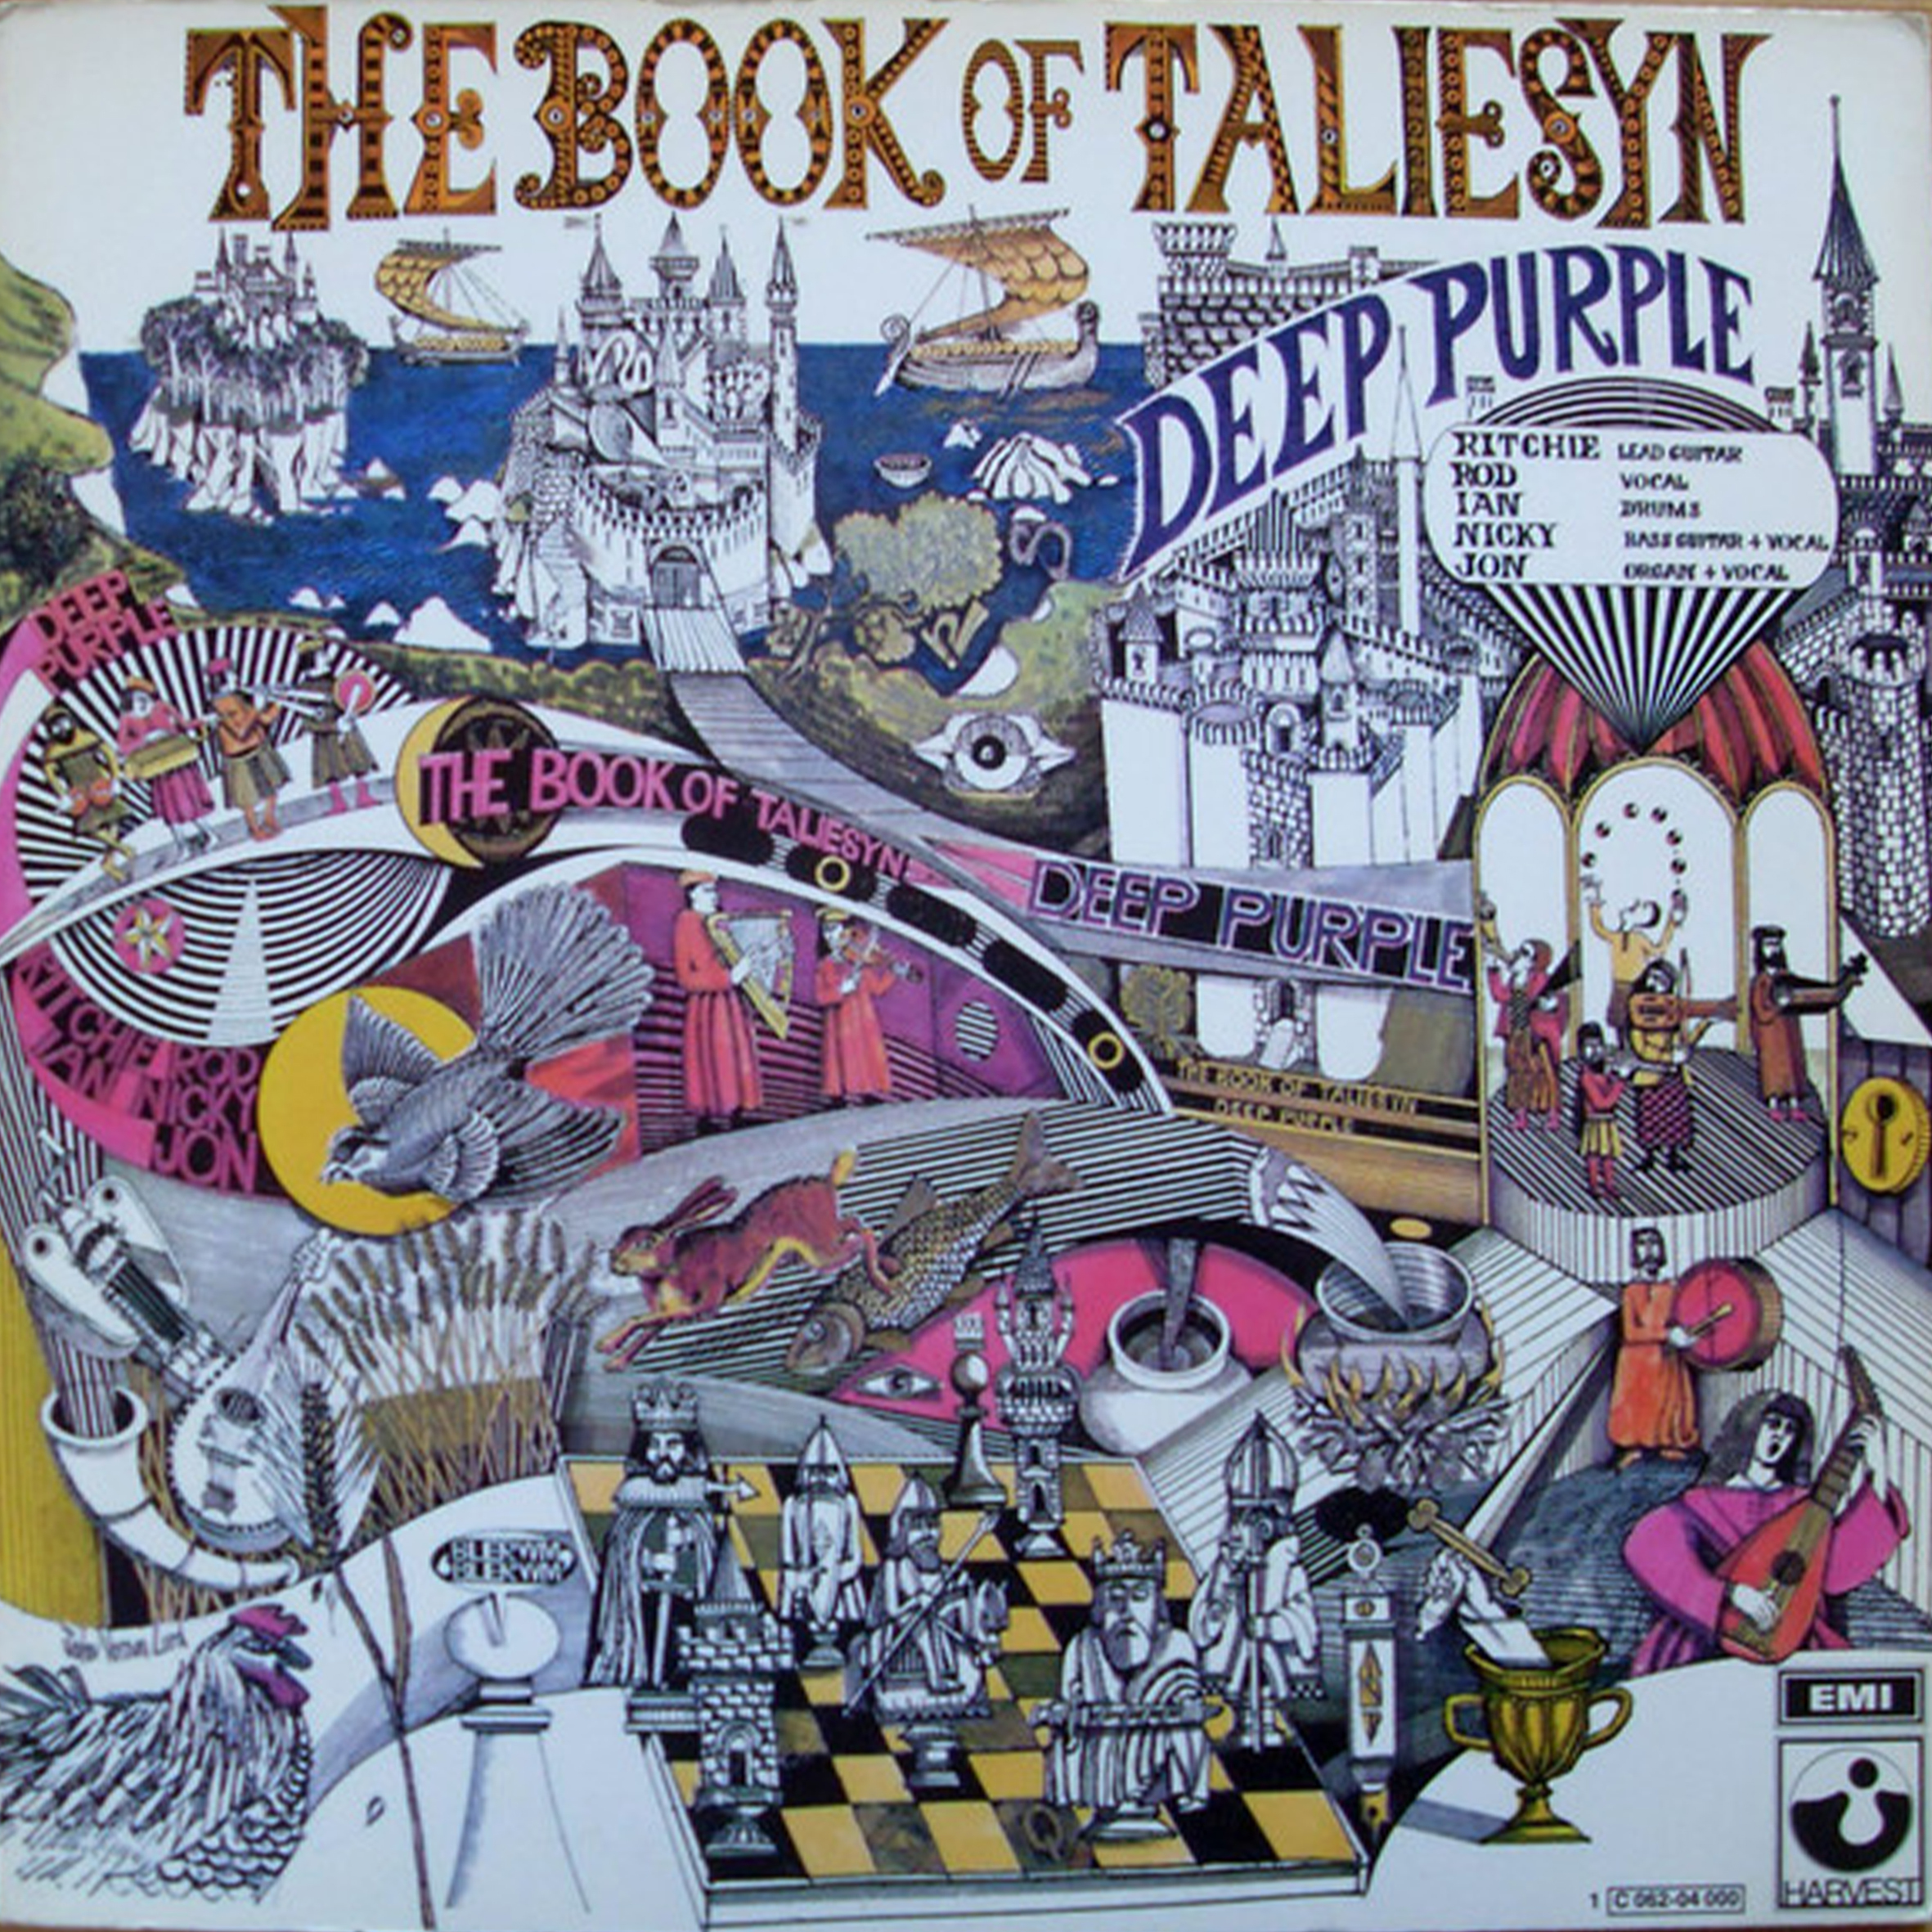 CD - Deep Purple - The Book Of Taliesyn